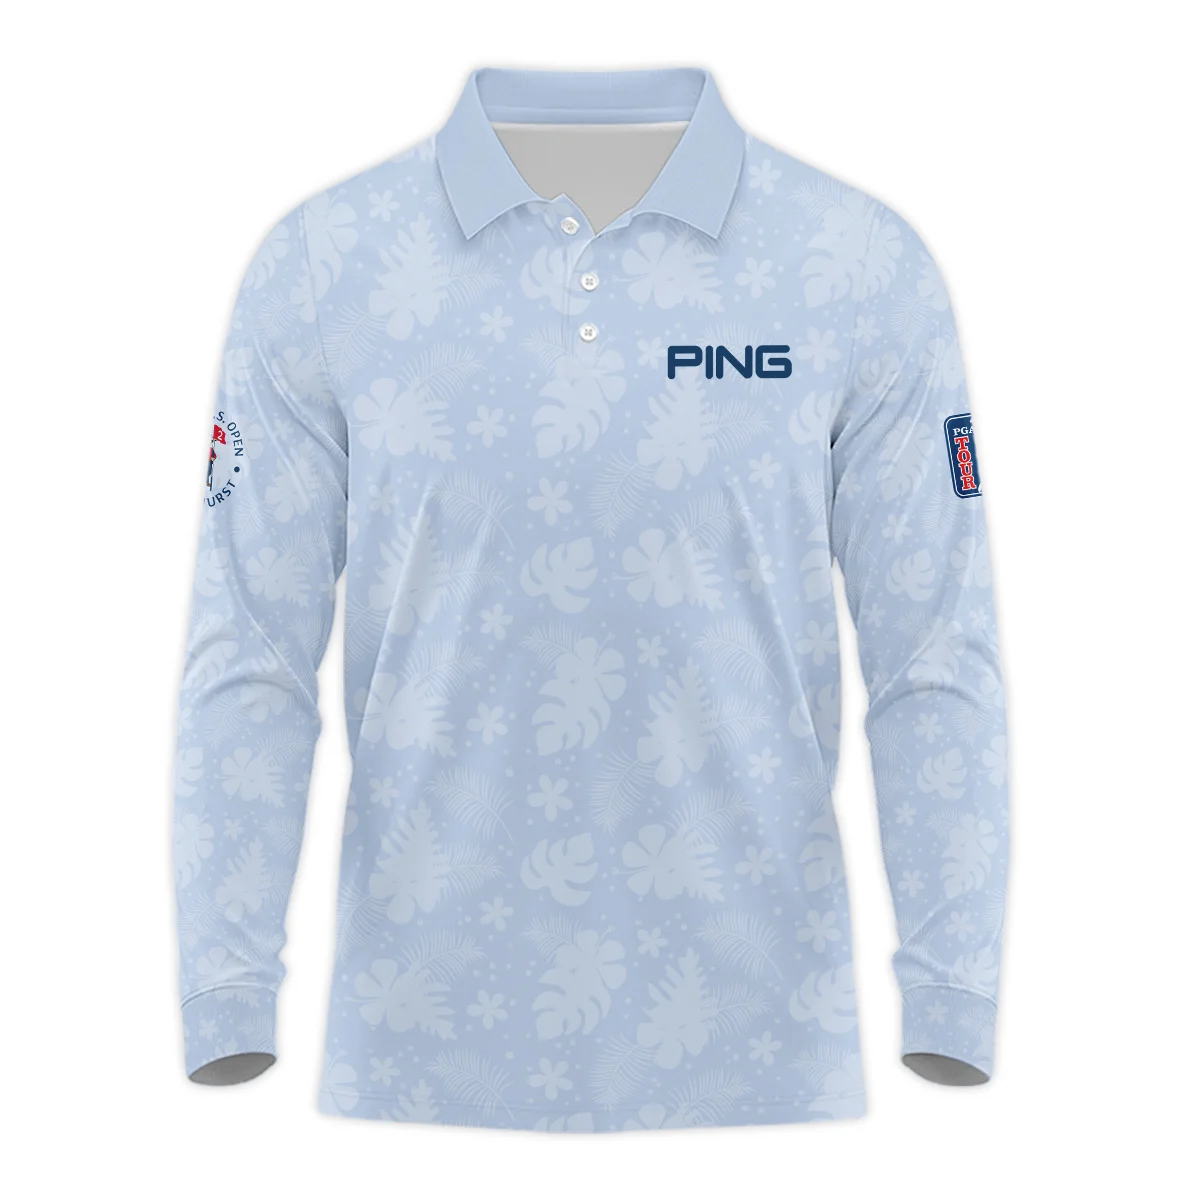 124th U.S. Open Pinehurst Ping Golf Unisex Sweatshirt Light Blue Pastel Floral Hawaiian Pattern All Over Print Sweatshirt